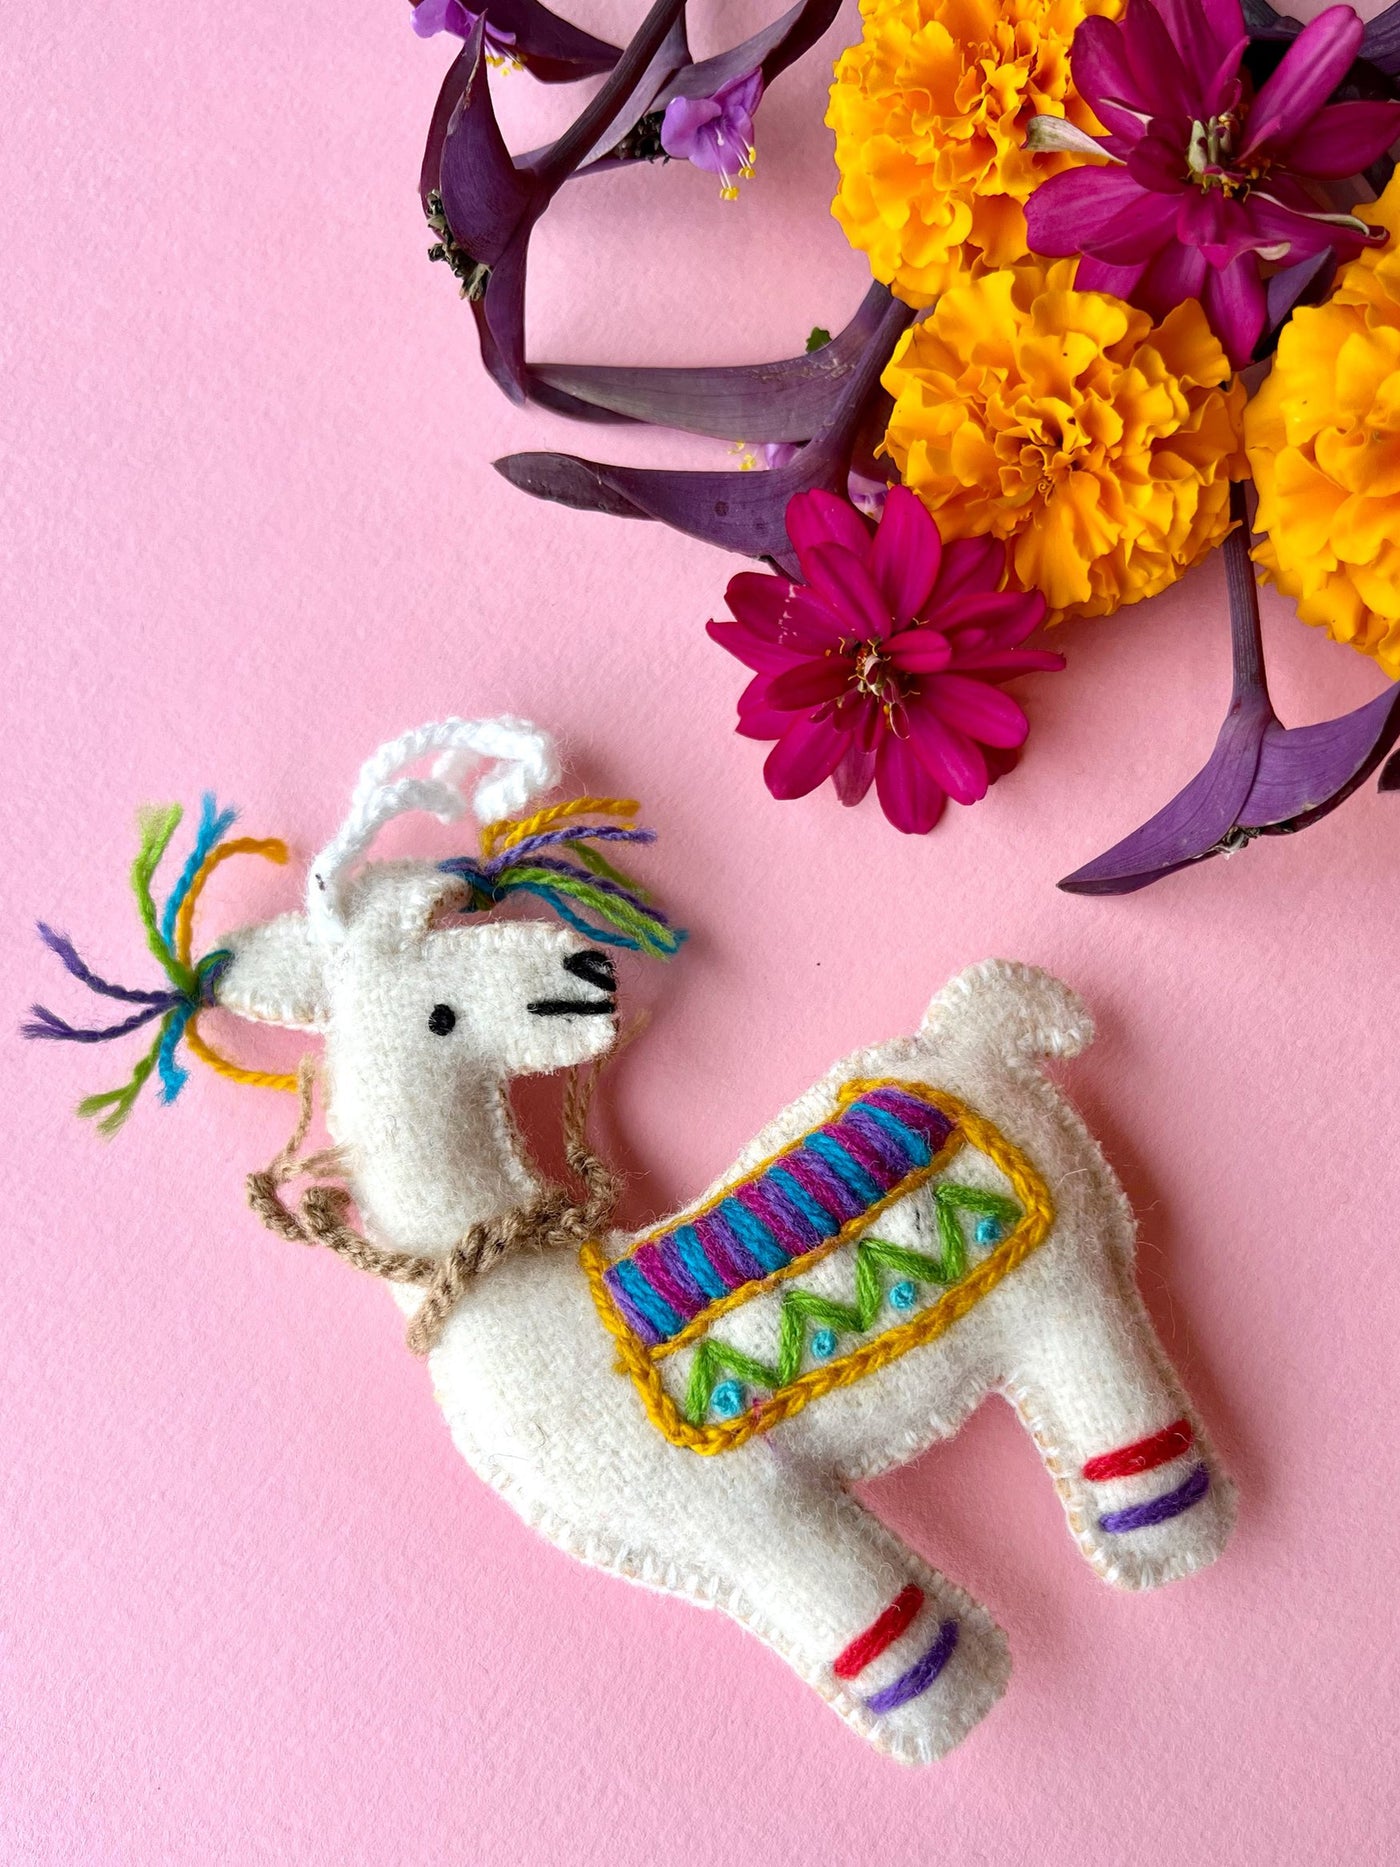 Embroidered Llama Ornament